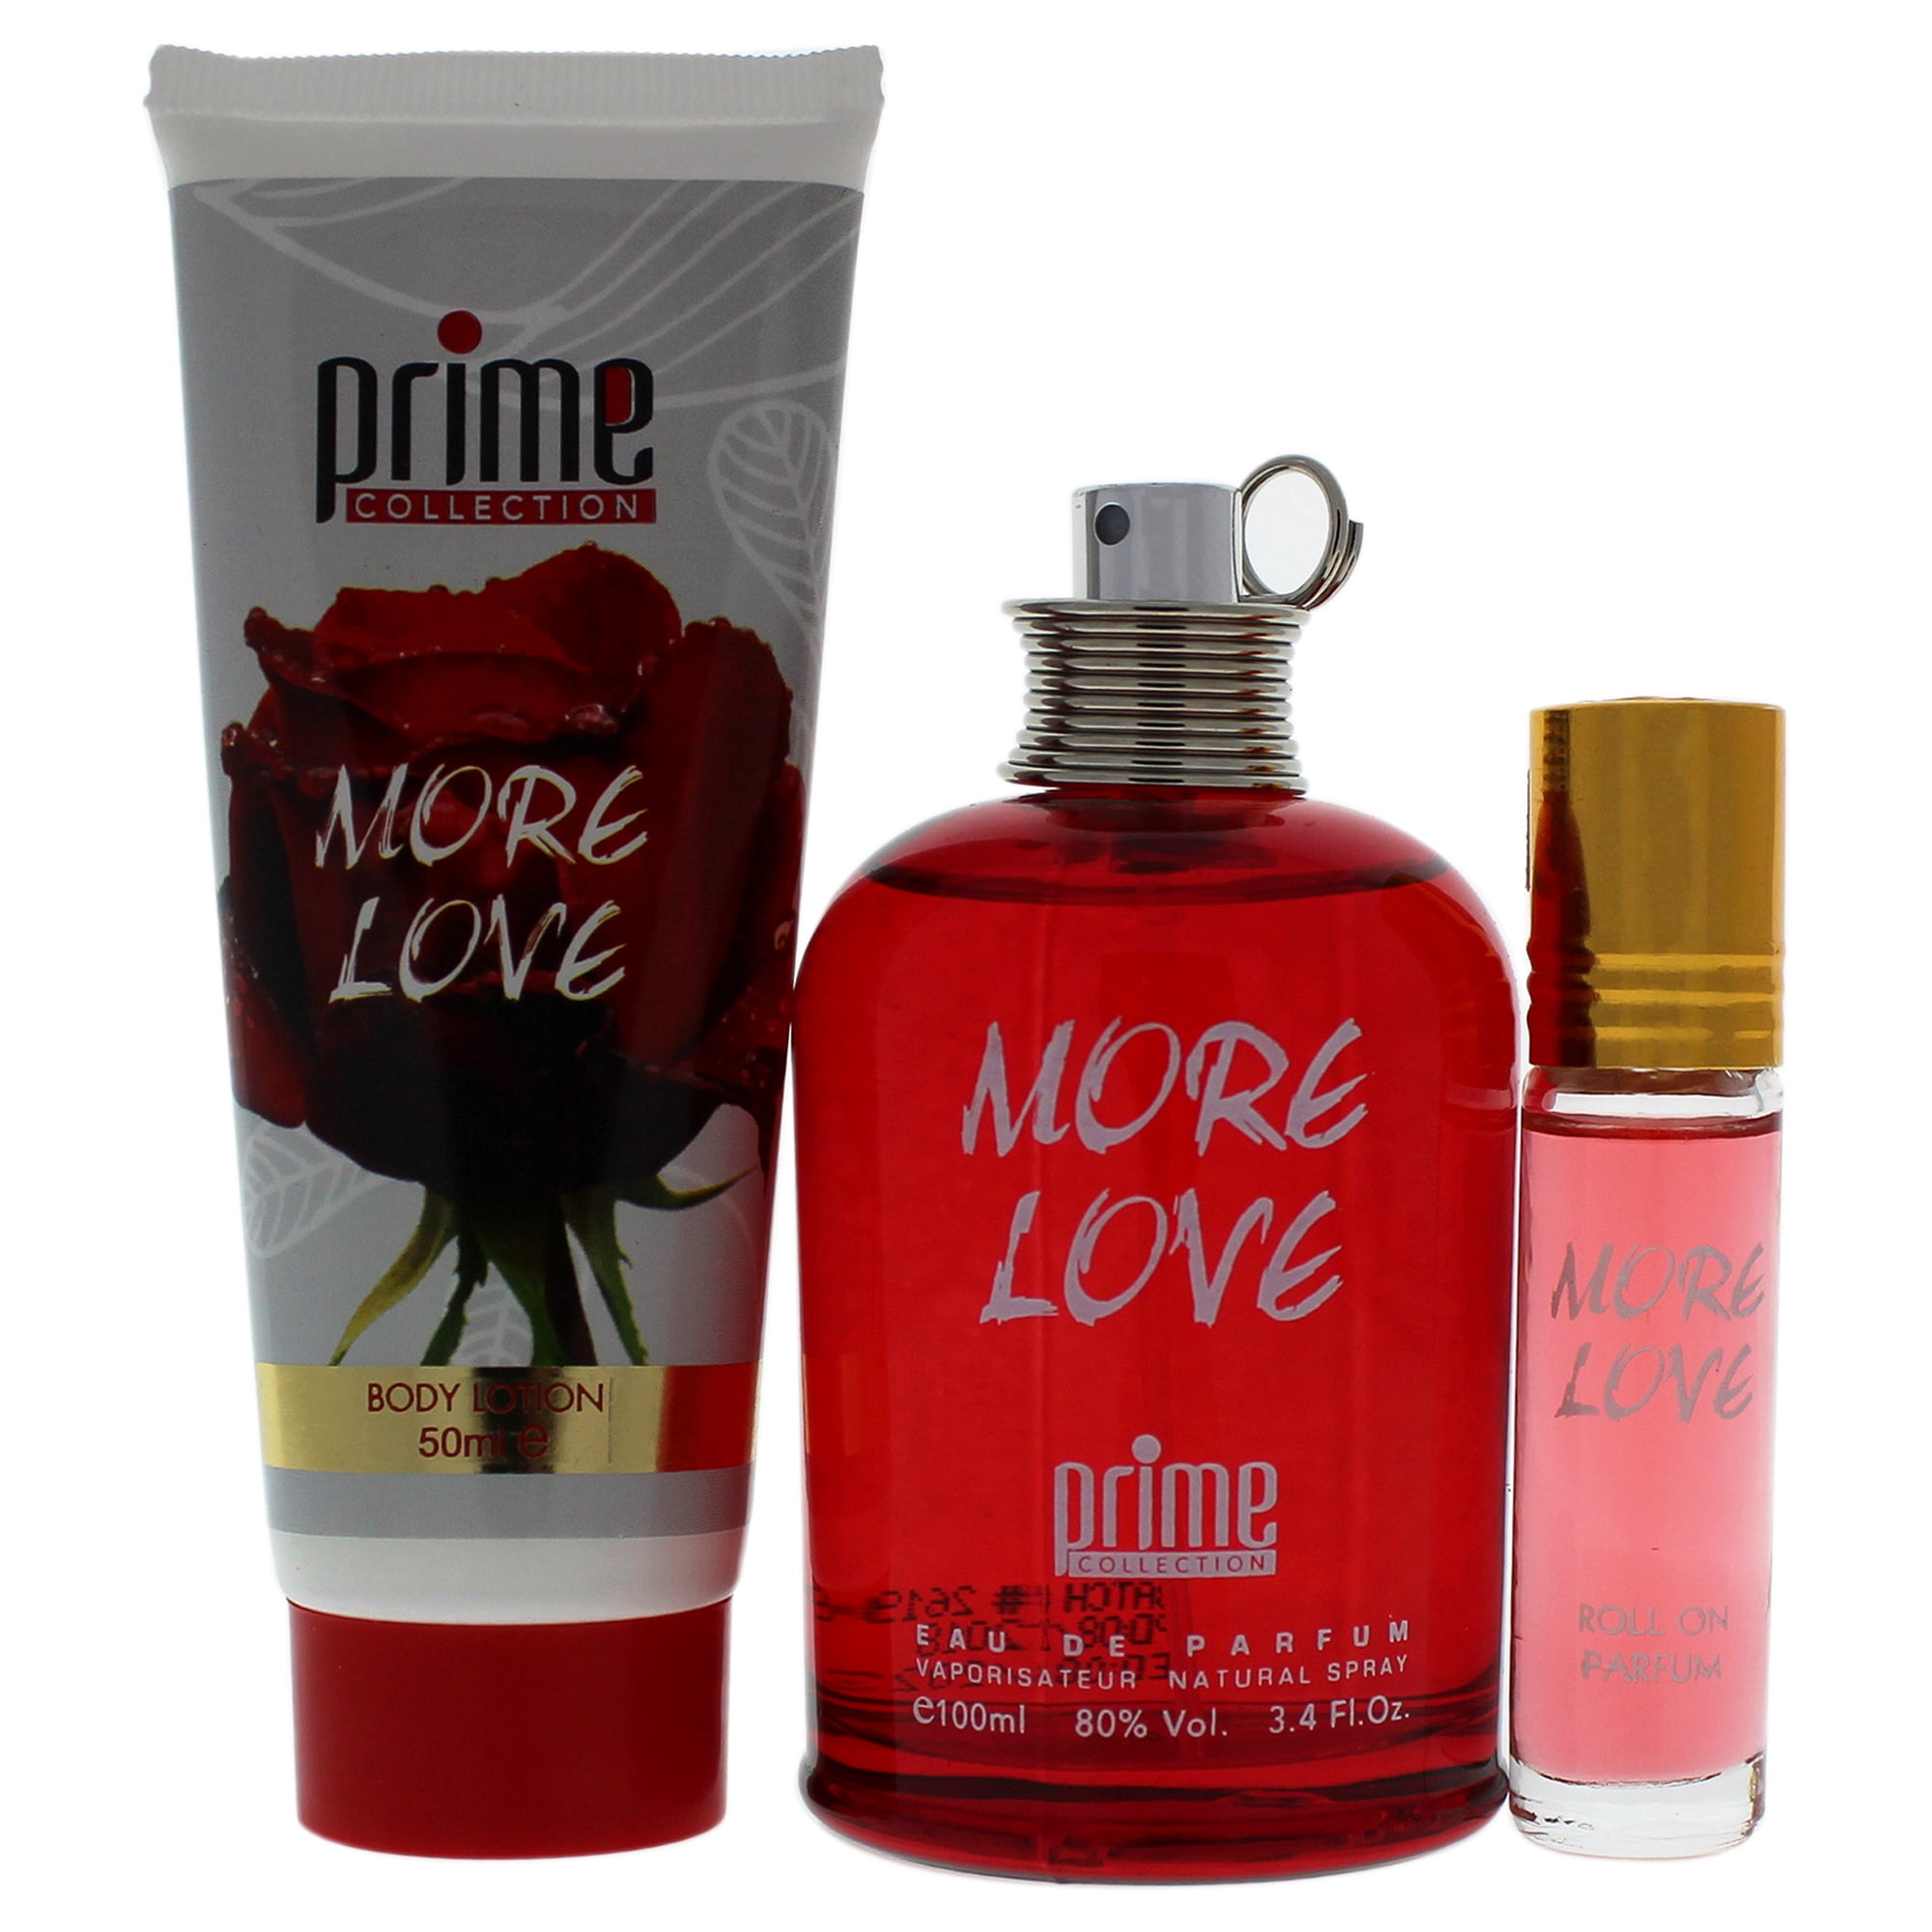 Prime collection. Духи Flame Orchid. Lovesmore духи. Deep sense women Prime collection Parfums. Морэ лов духи красные.